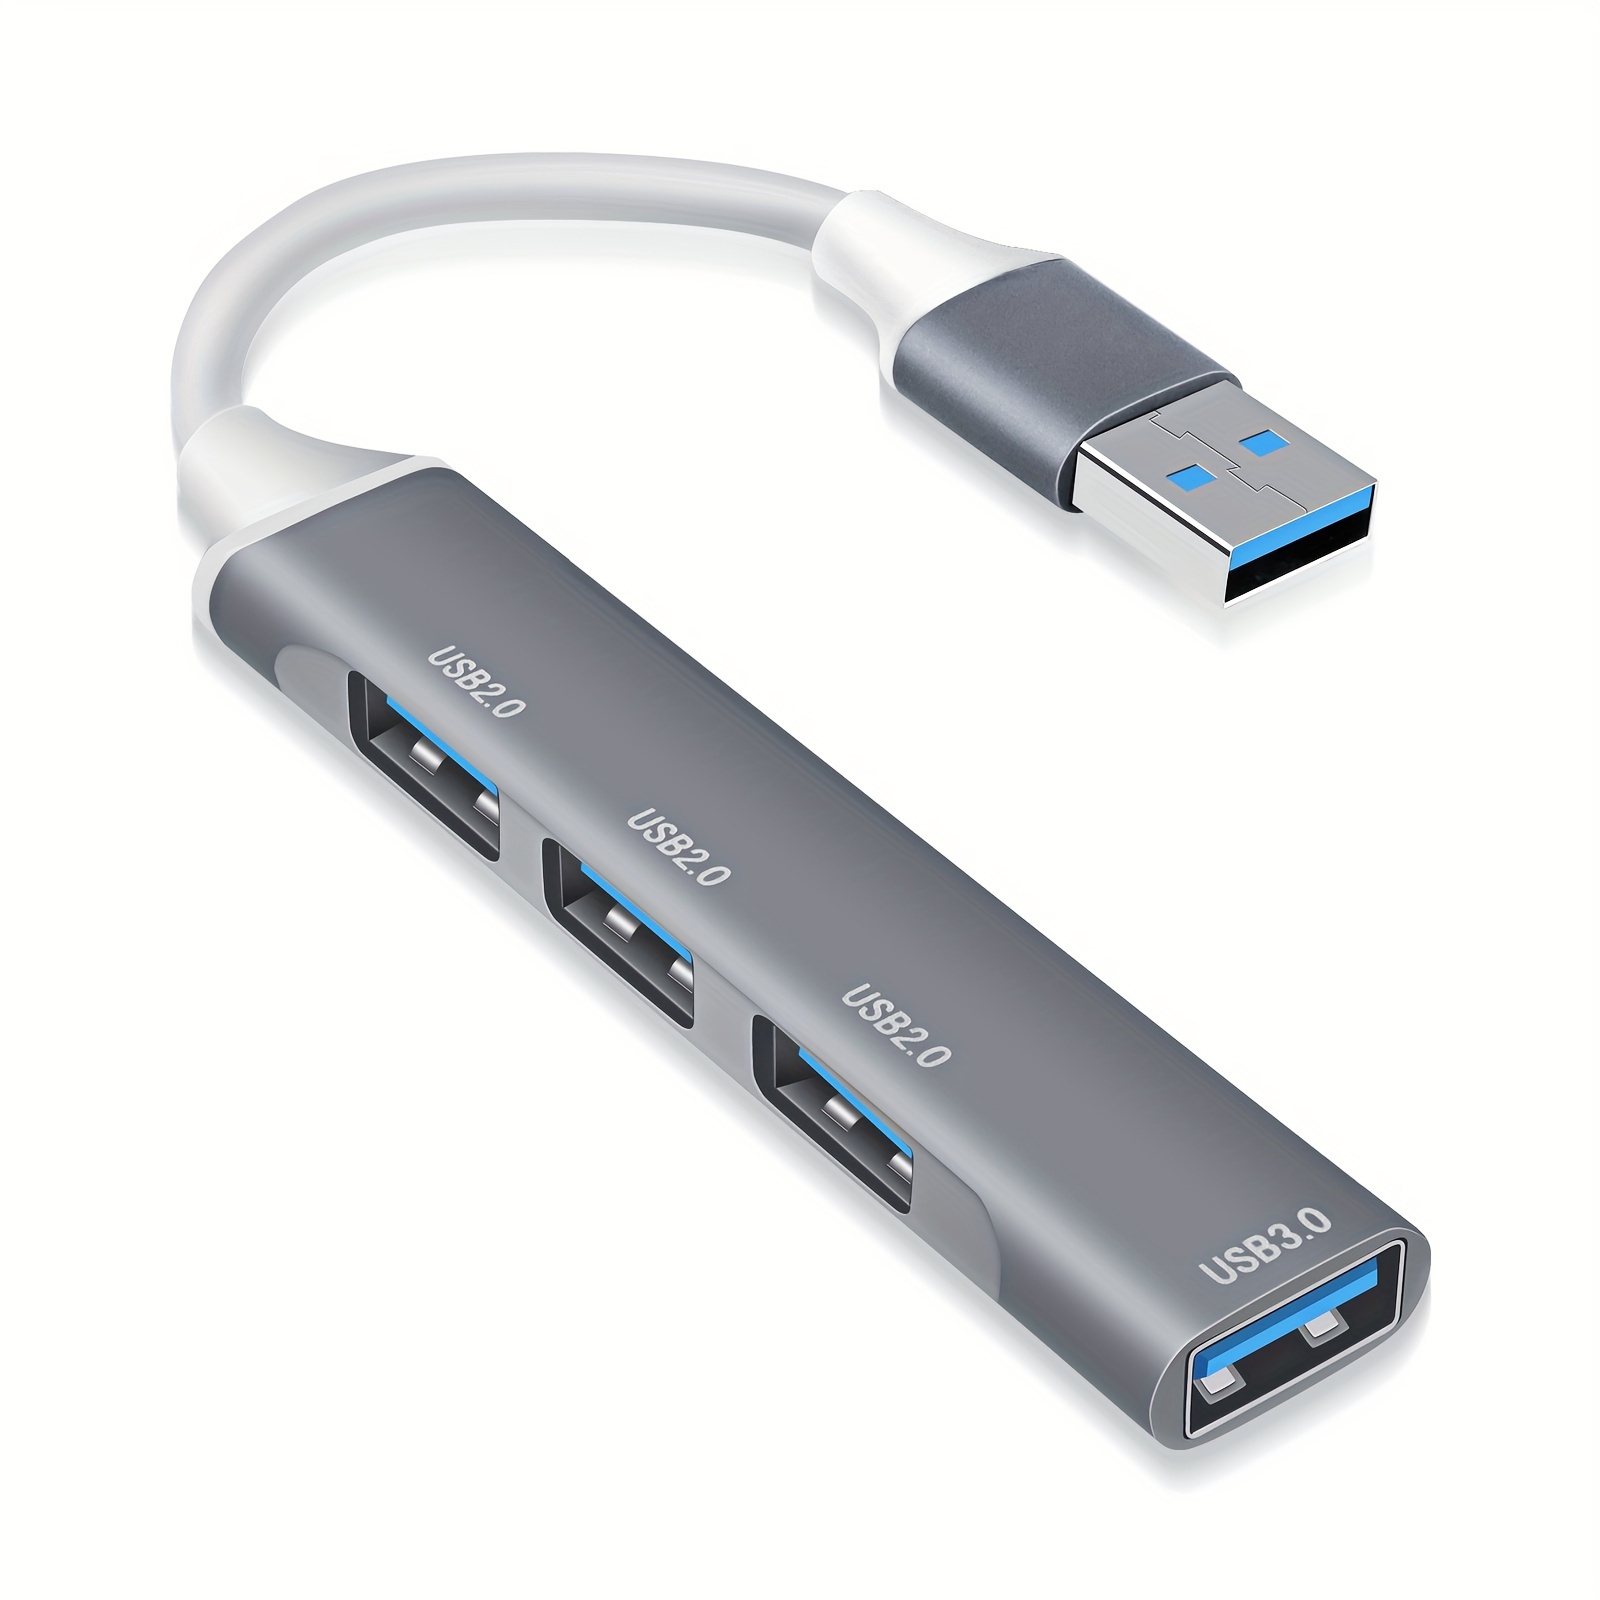 4-Port USB 3.0 Hub, Ultra-Slim USB 3.0 Hub Compatible for MacBook